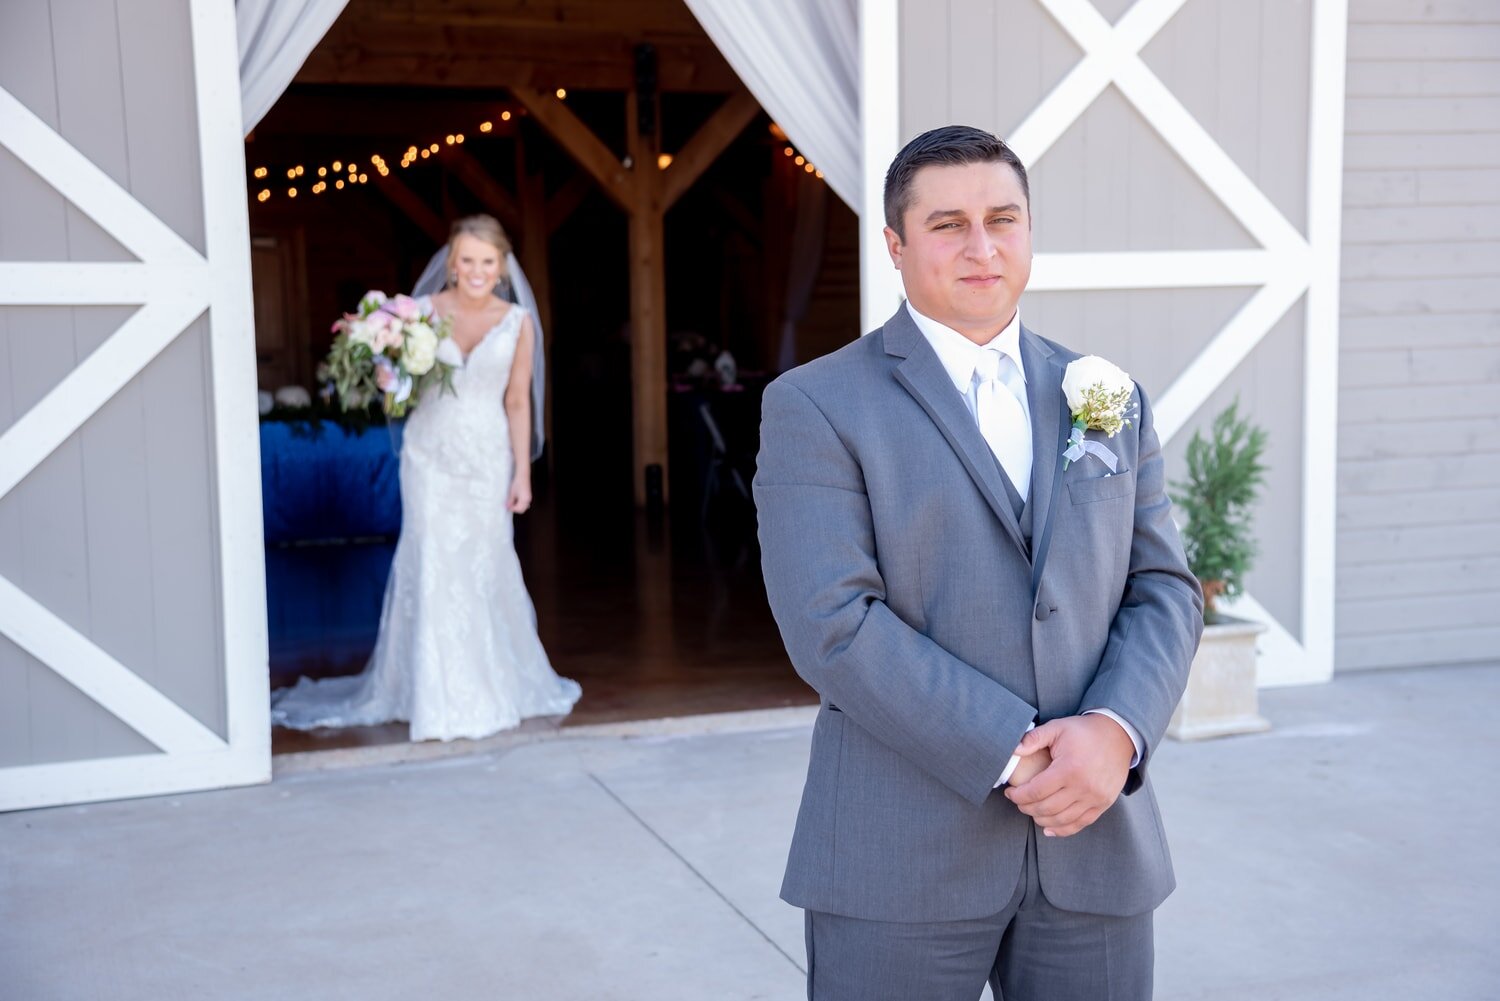 wedding-photographer-photography-okc-edmond-oklahoma-city-beautiful-bride-groom-first-look-portrait-smile-chadandbriephotography.jpg